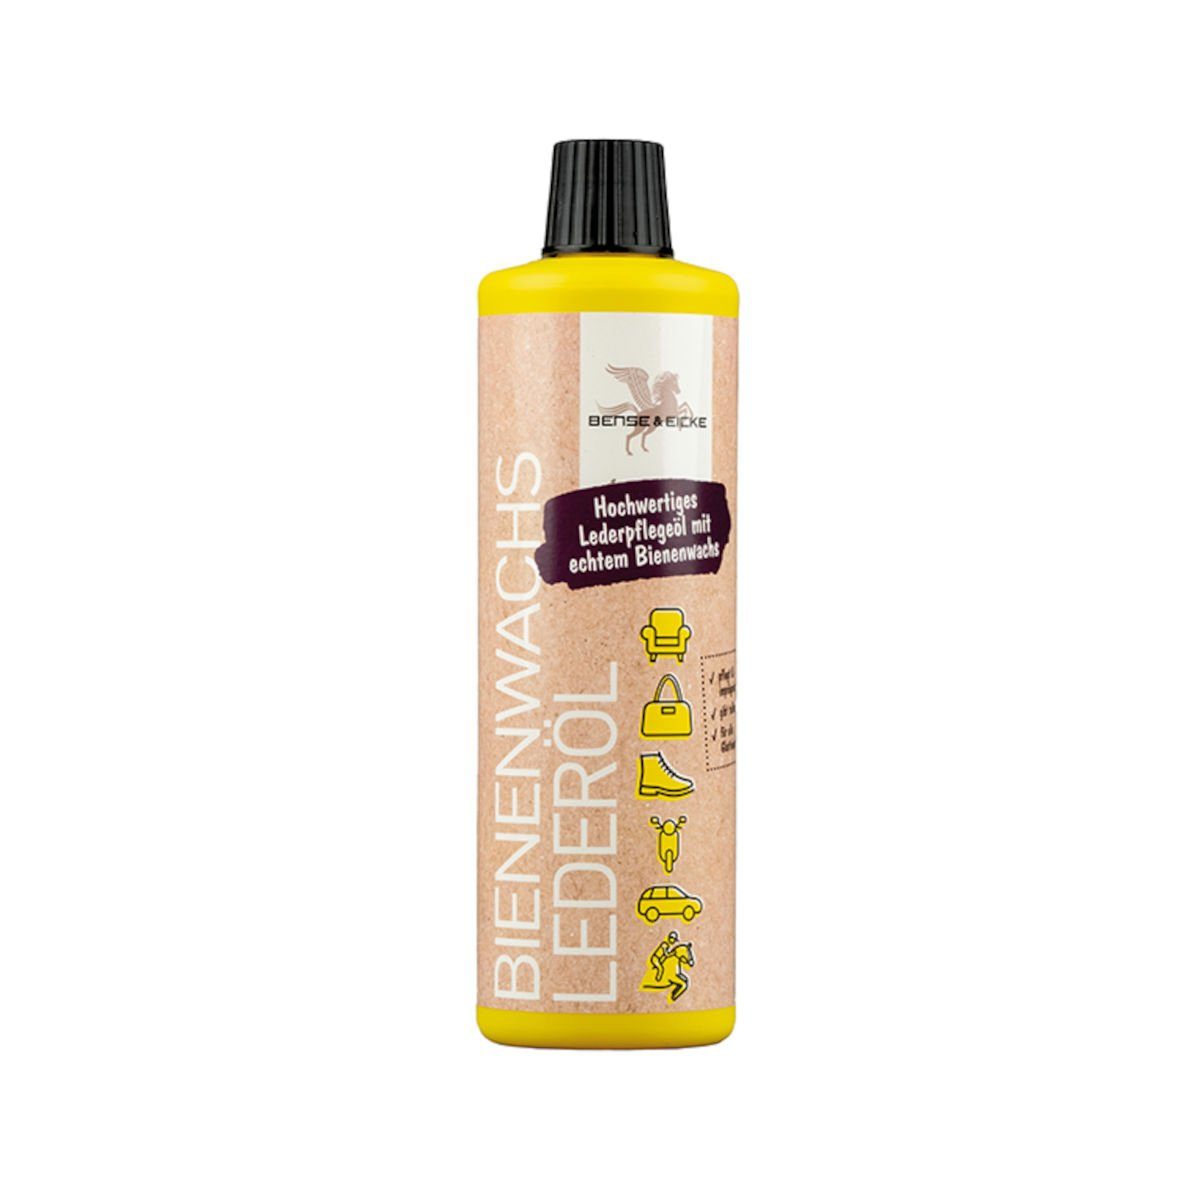 Bense & Eicke 500 ml (Packung) - Lederöl Bienenwachs-Lederpflegeöl